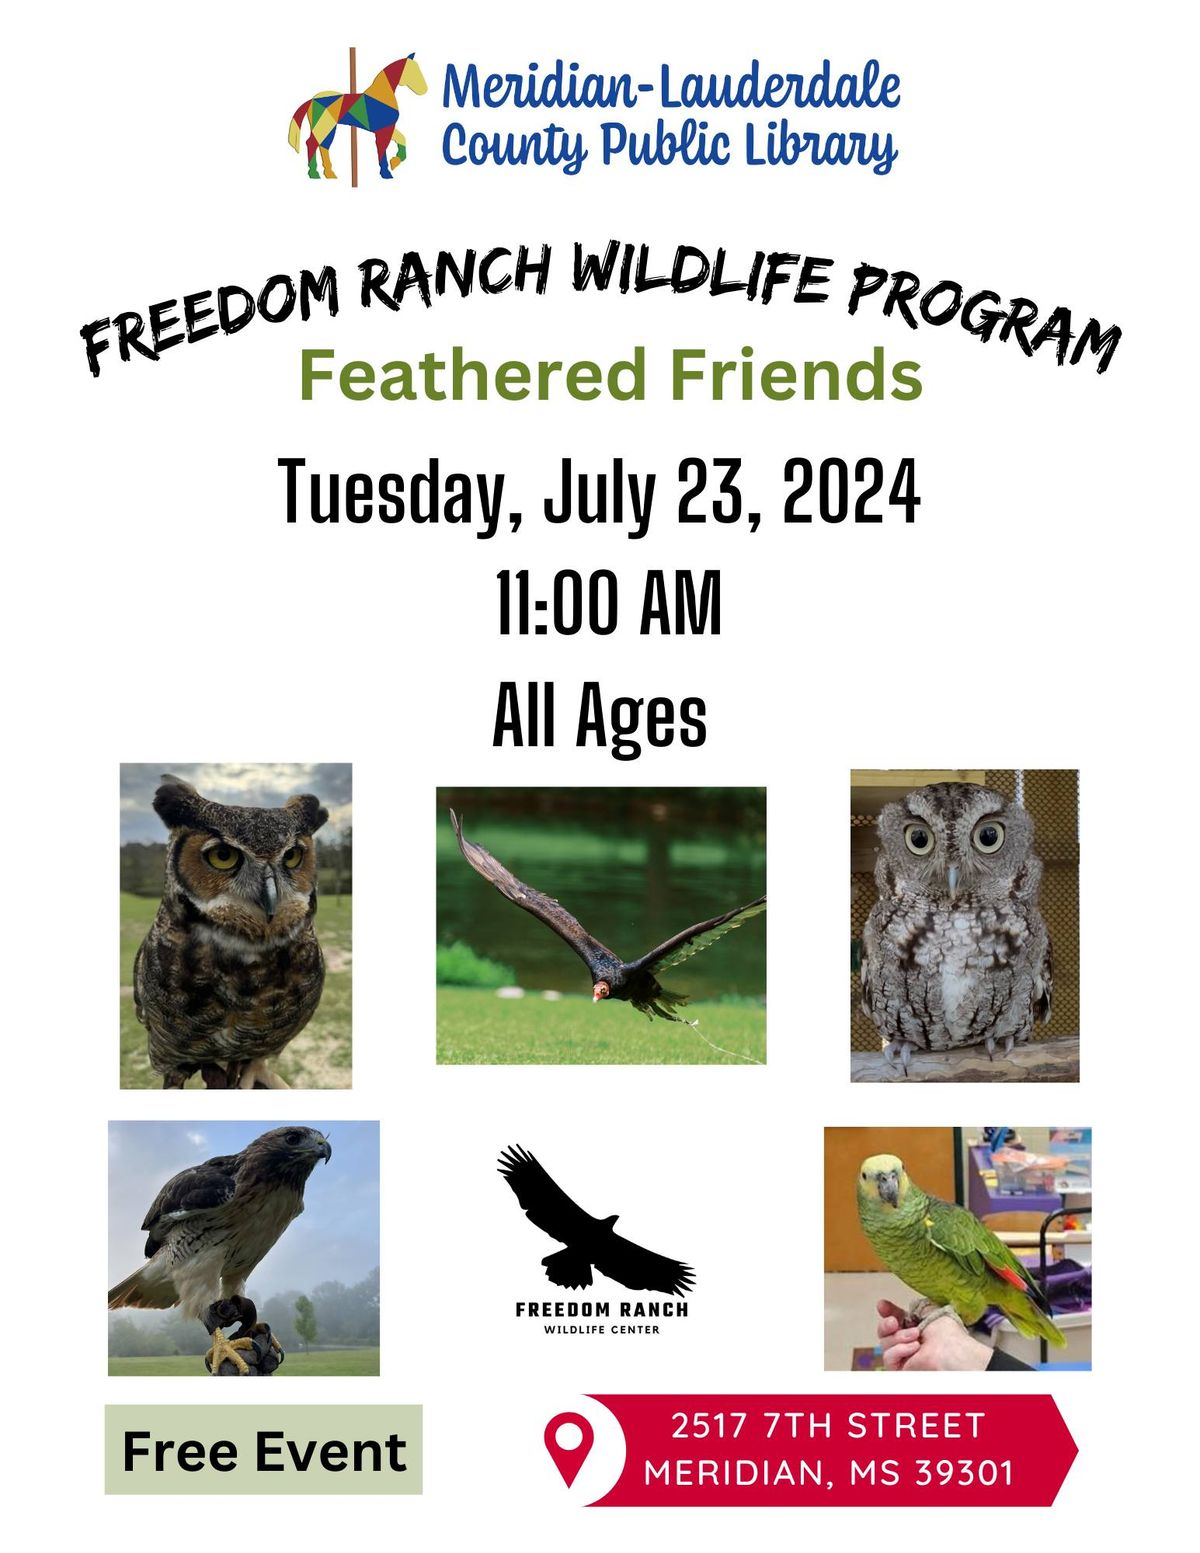 Freedom Ranch Wildlife Program: Feathered Friends